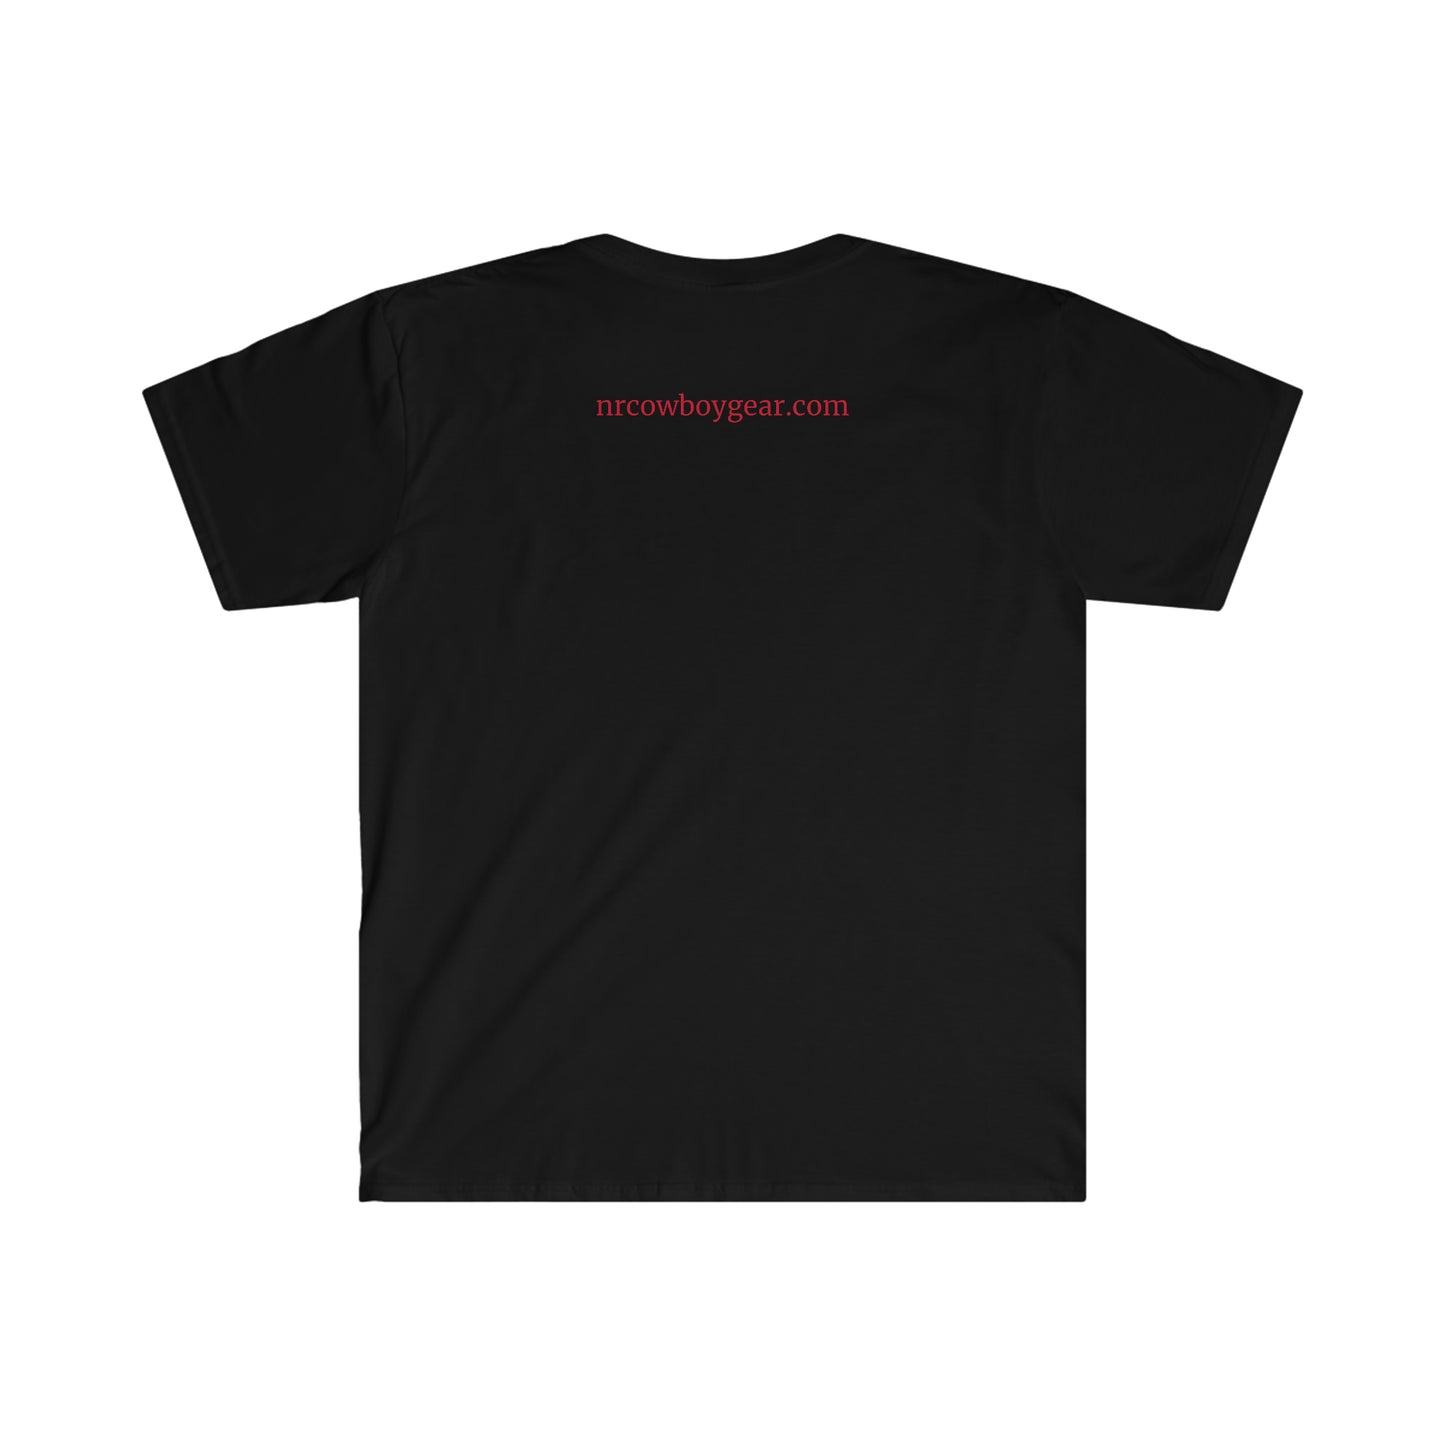 "Northern Range" Unisex Softstyle T-Shirt